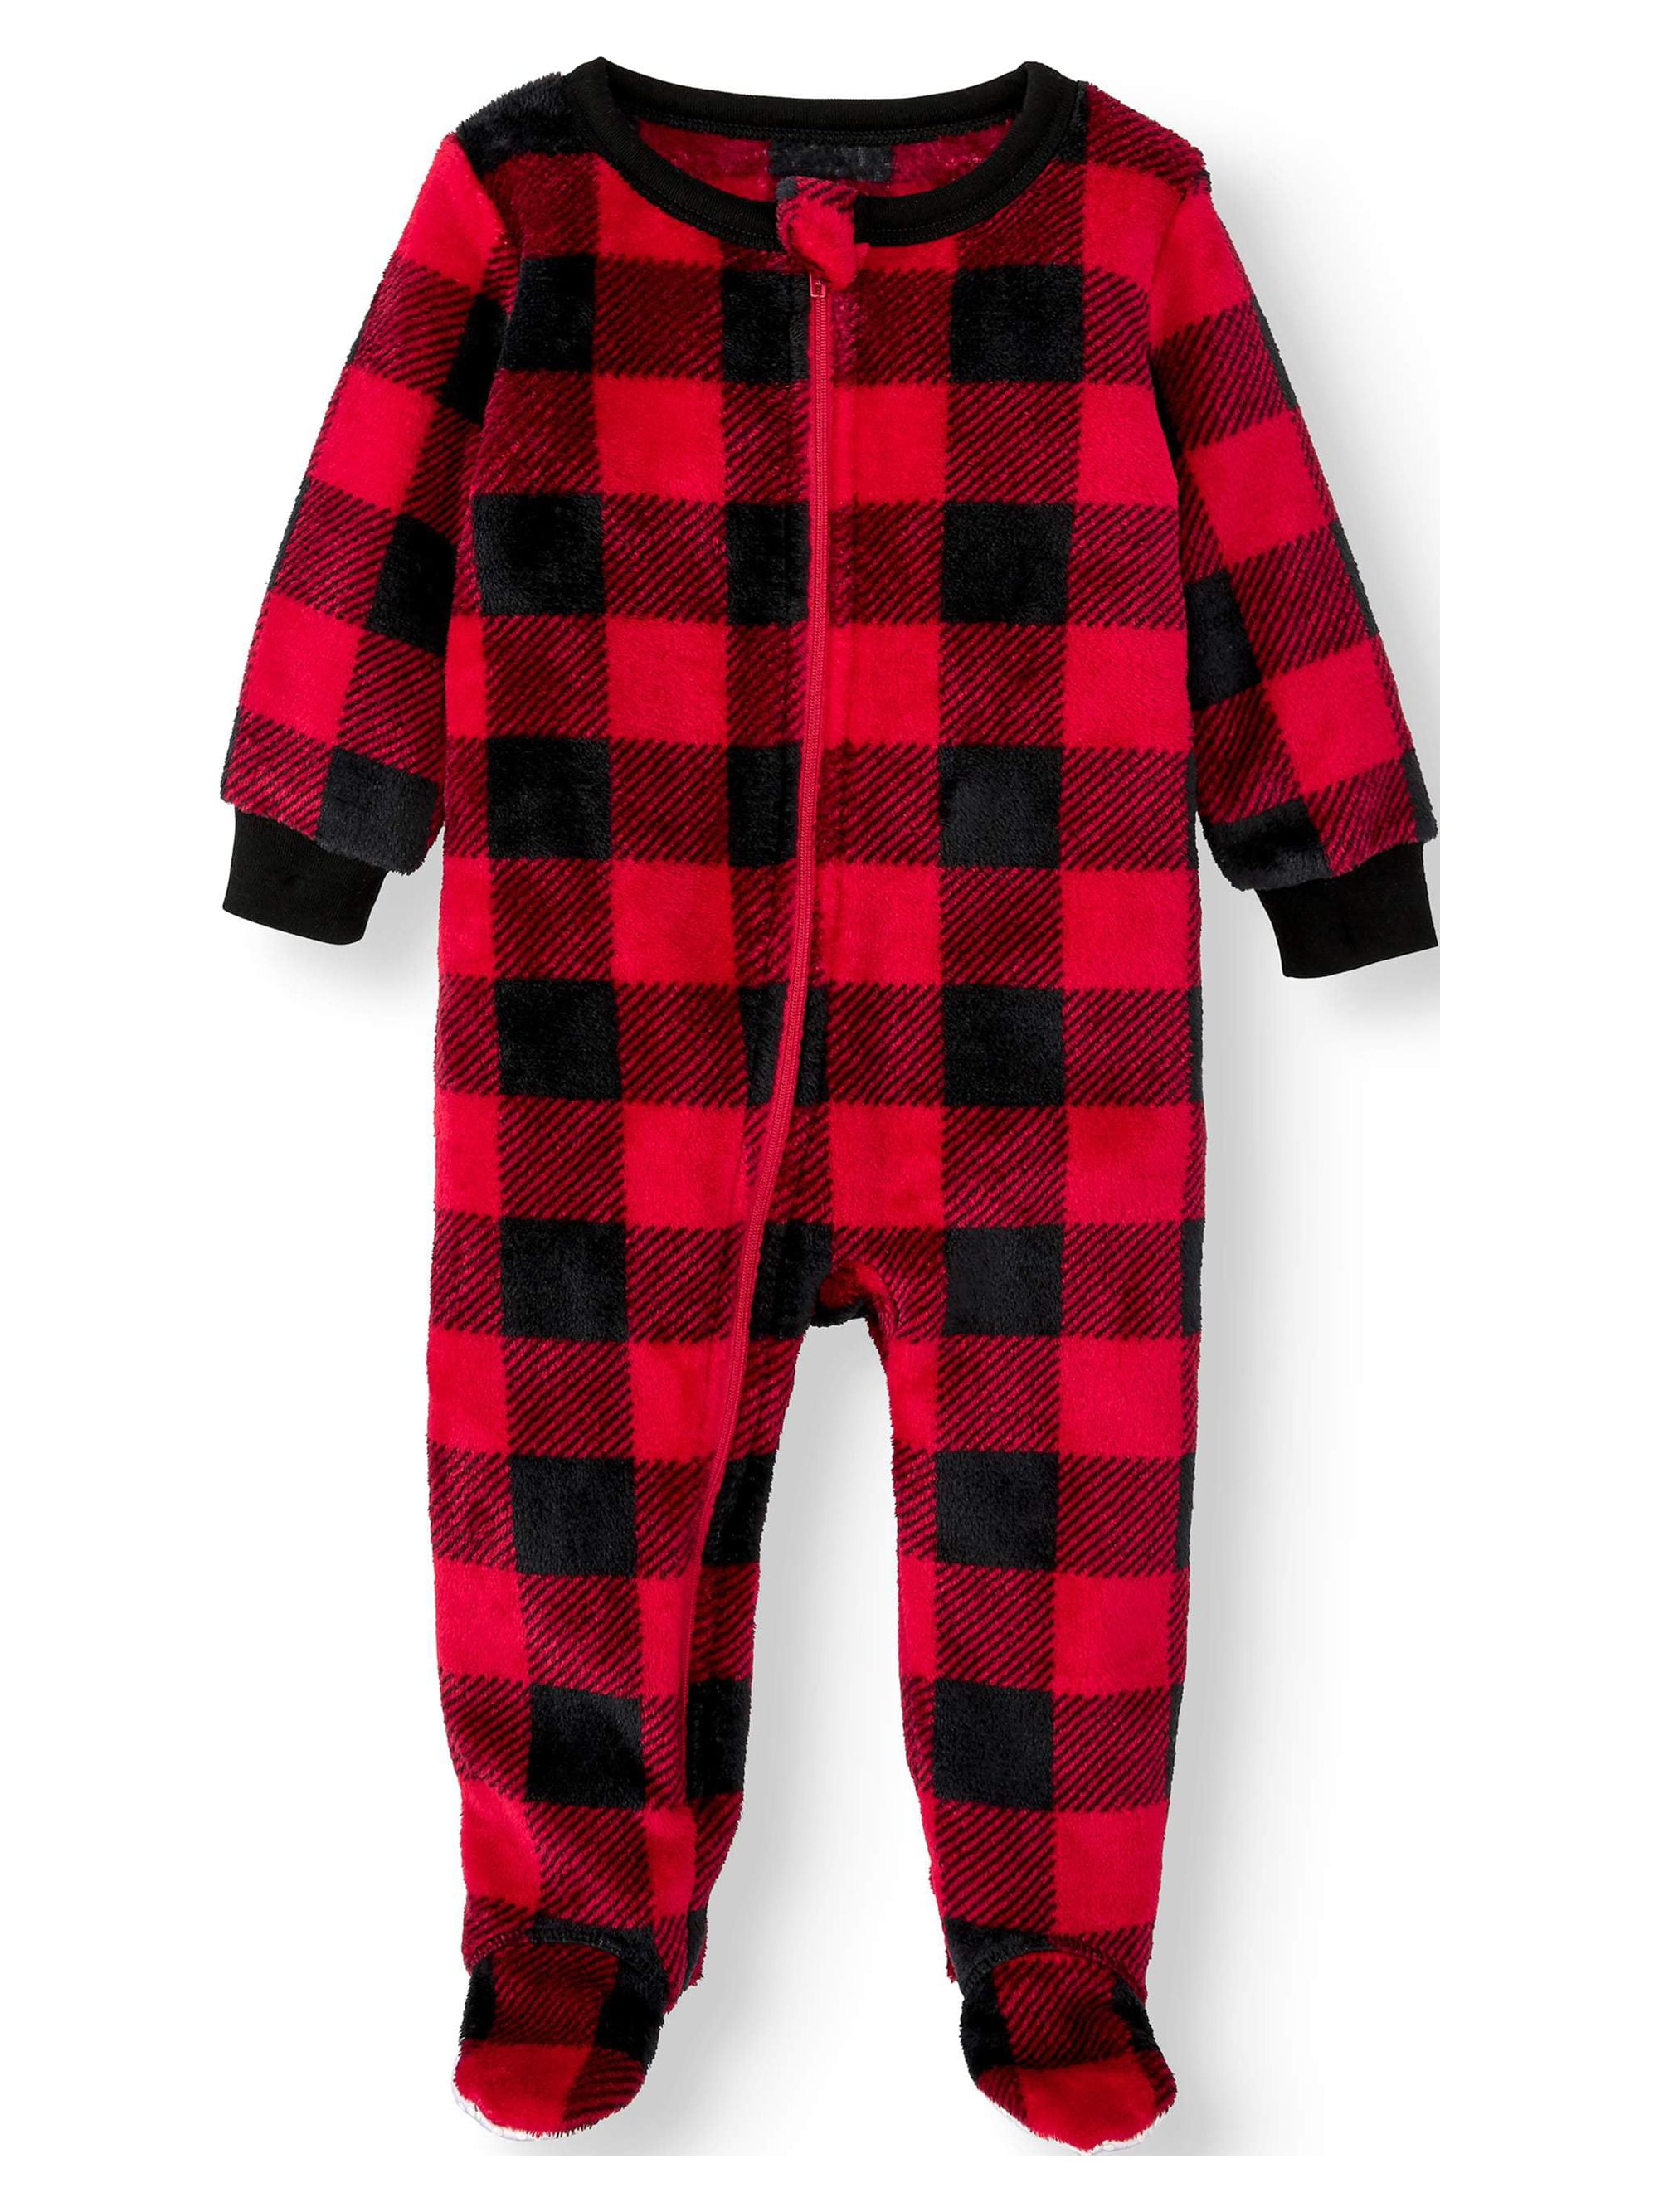 YuanJuli Matching Buffalo Plaid Family Christmas Pajamas Sets Long